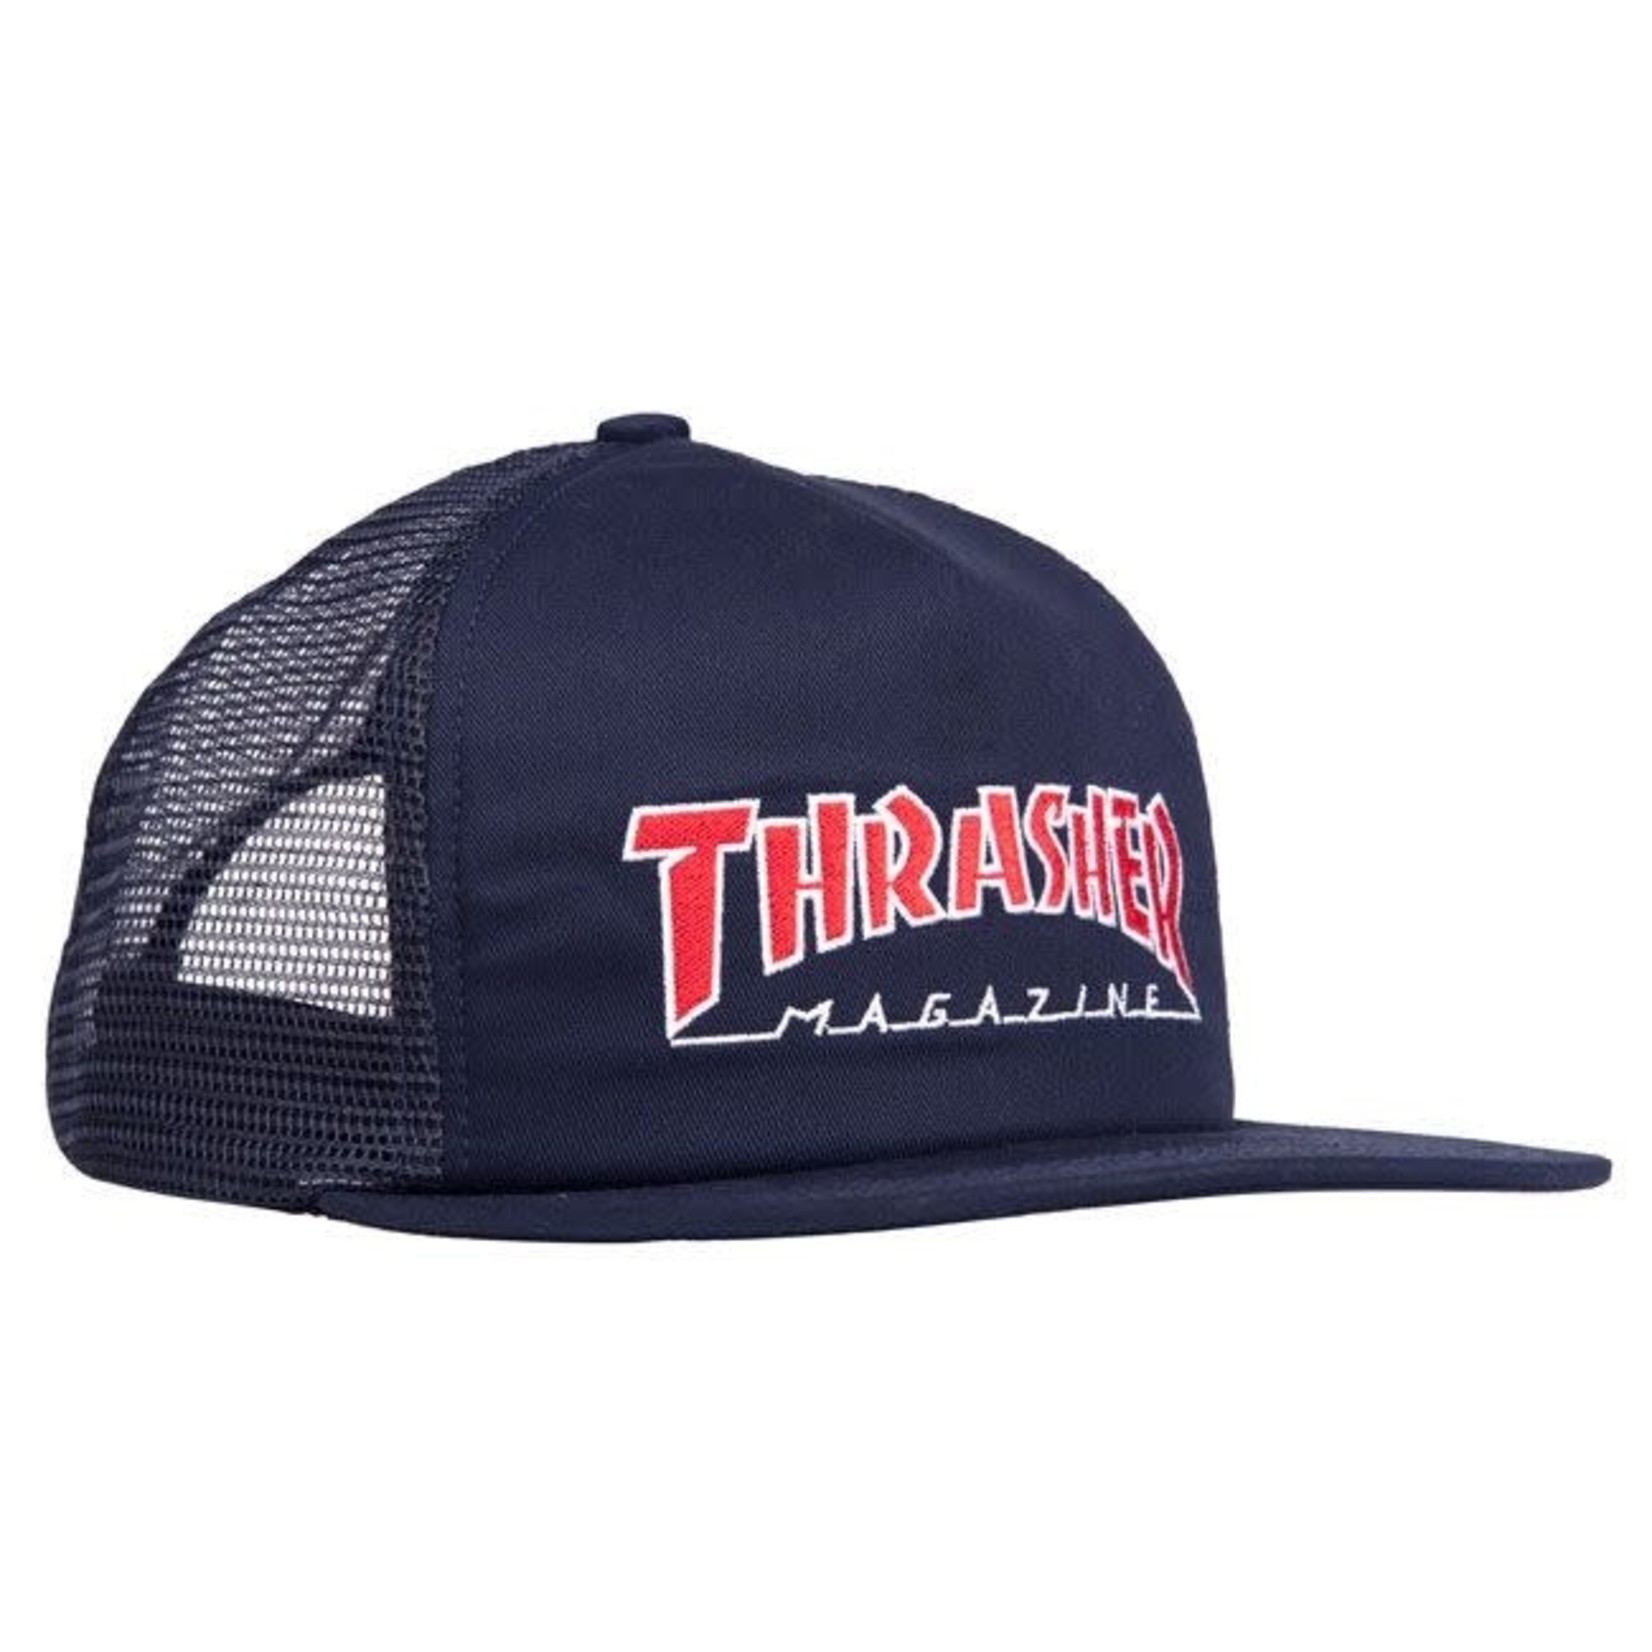 Thrasher Thrasher Embroidered Outlined Snapback Hat - Navy